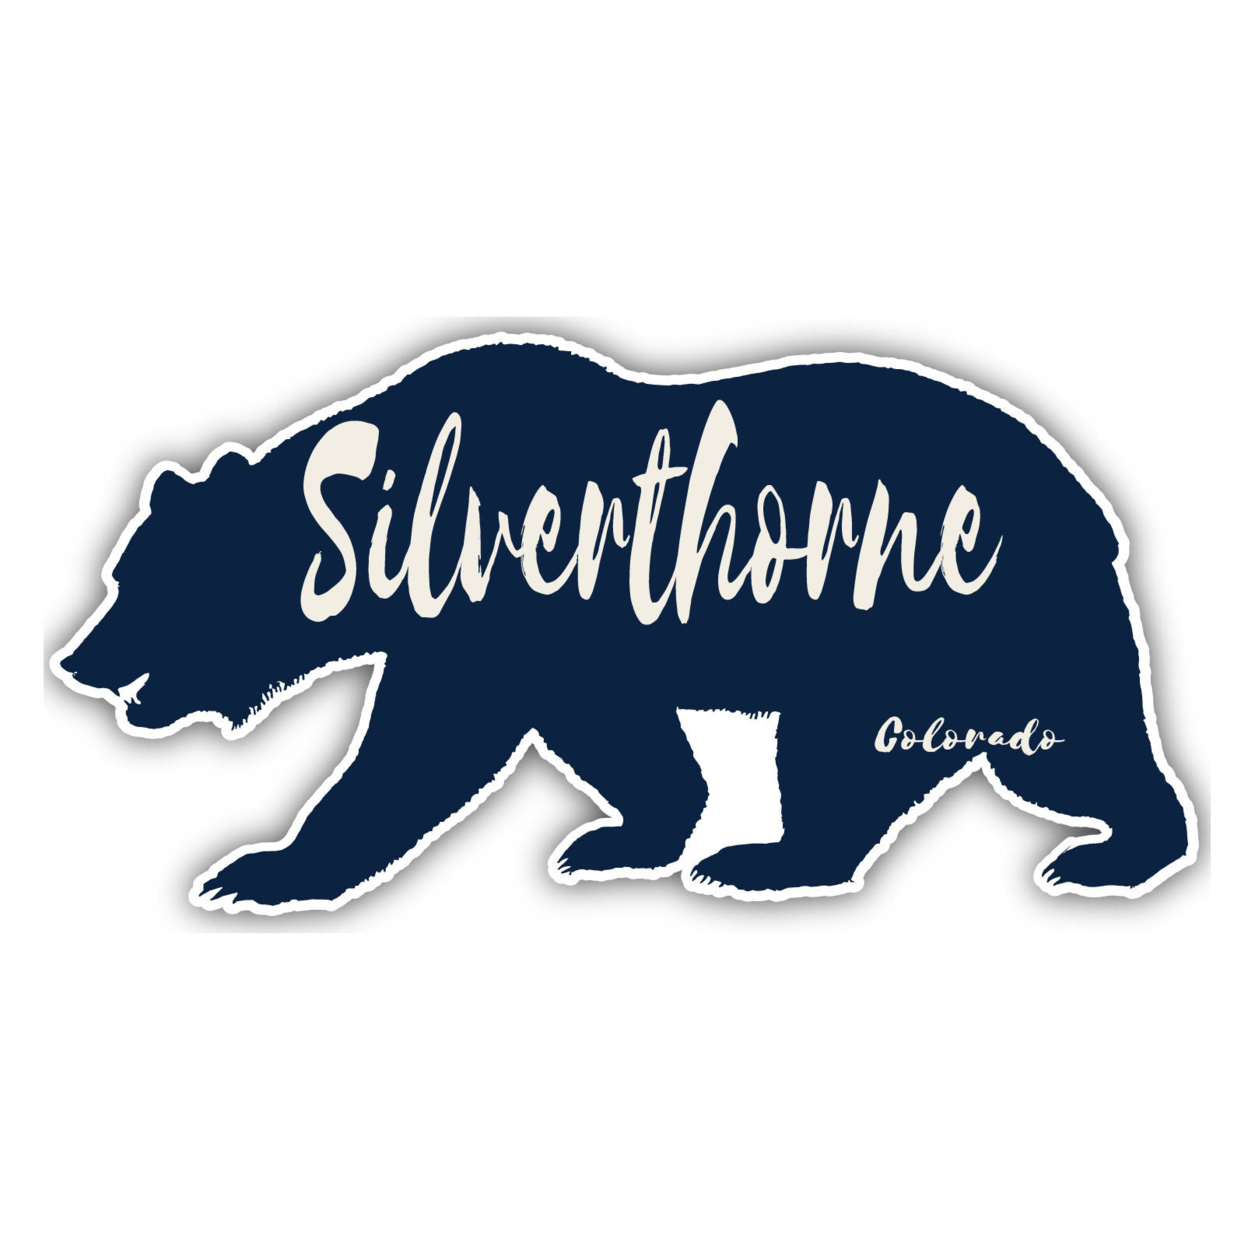 Silverthorne Colorado Souvenir Decorative Stickers (Choose Theme And Size) - Single Unit, 4-Inch, Bear